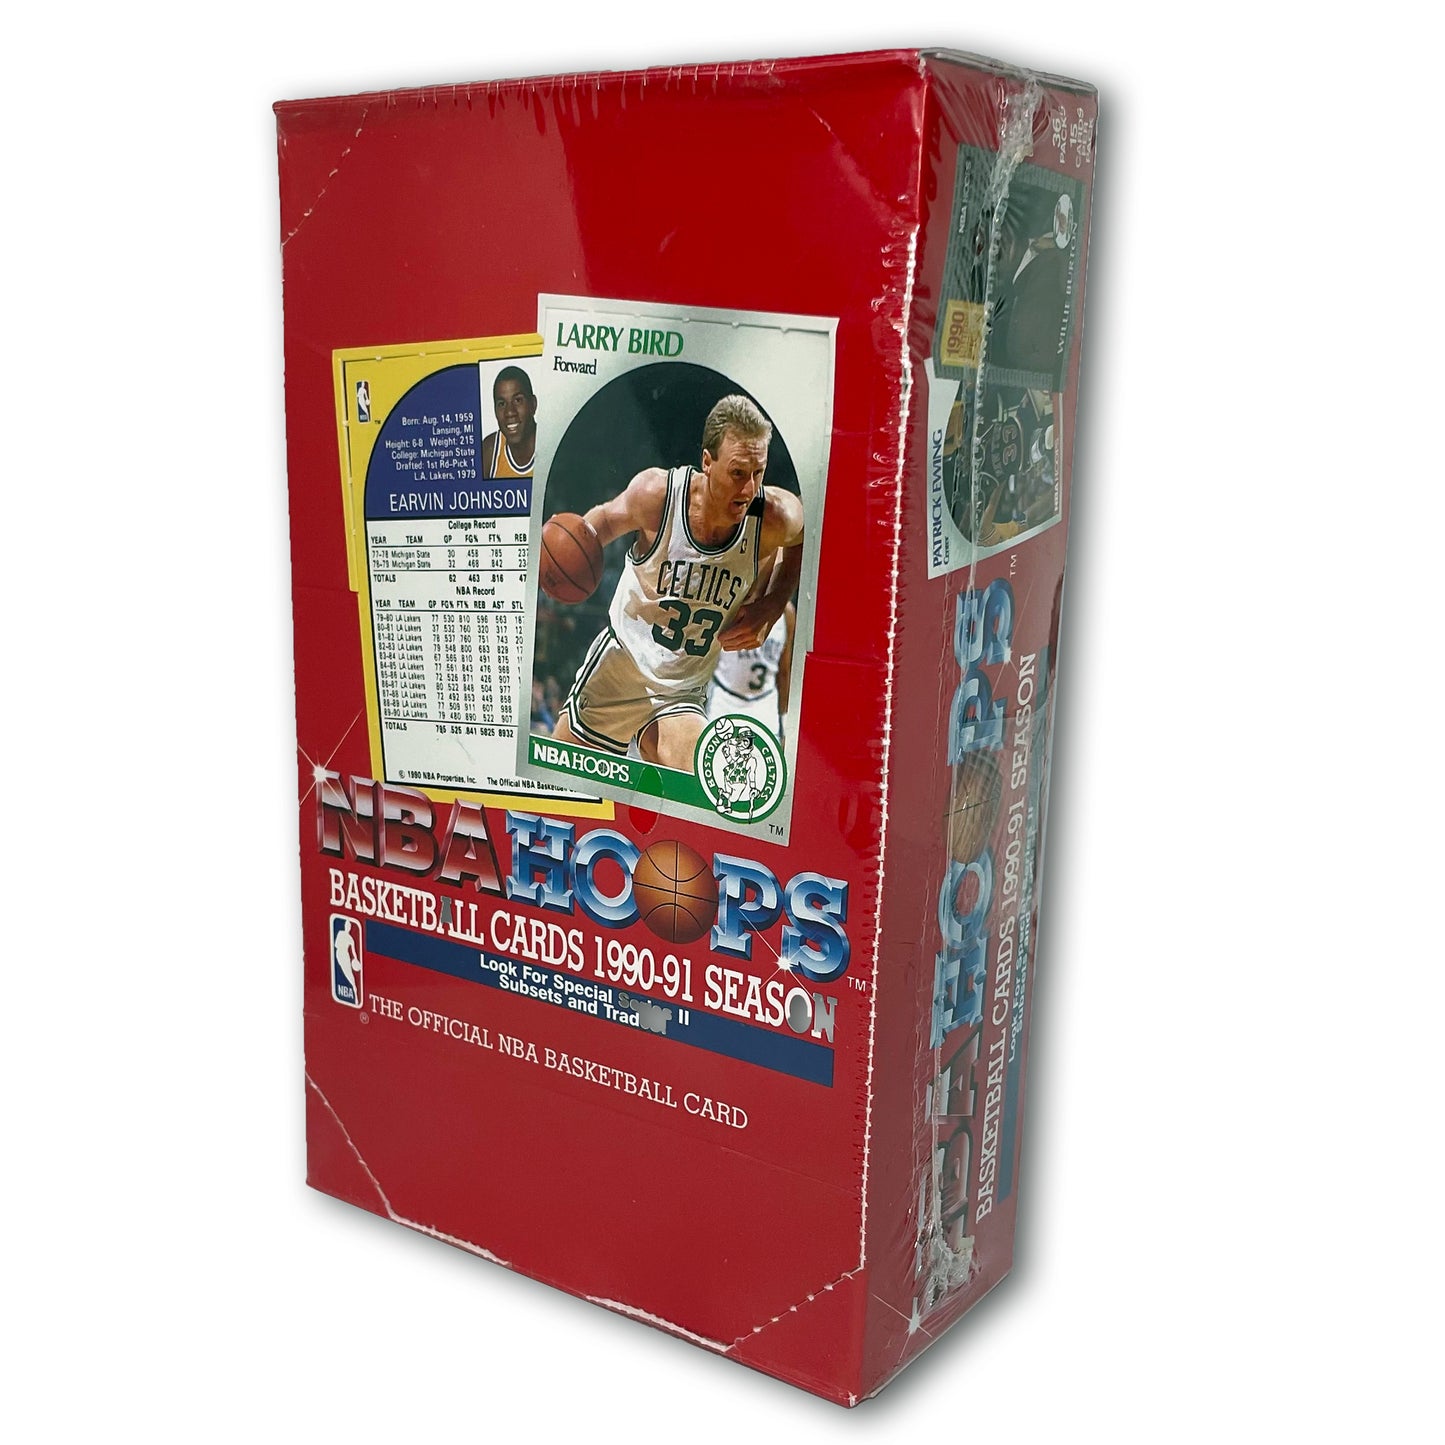 NBA Hoops Basketball Cards 1990-91 Season (Red)